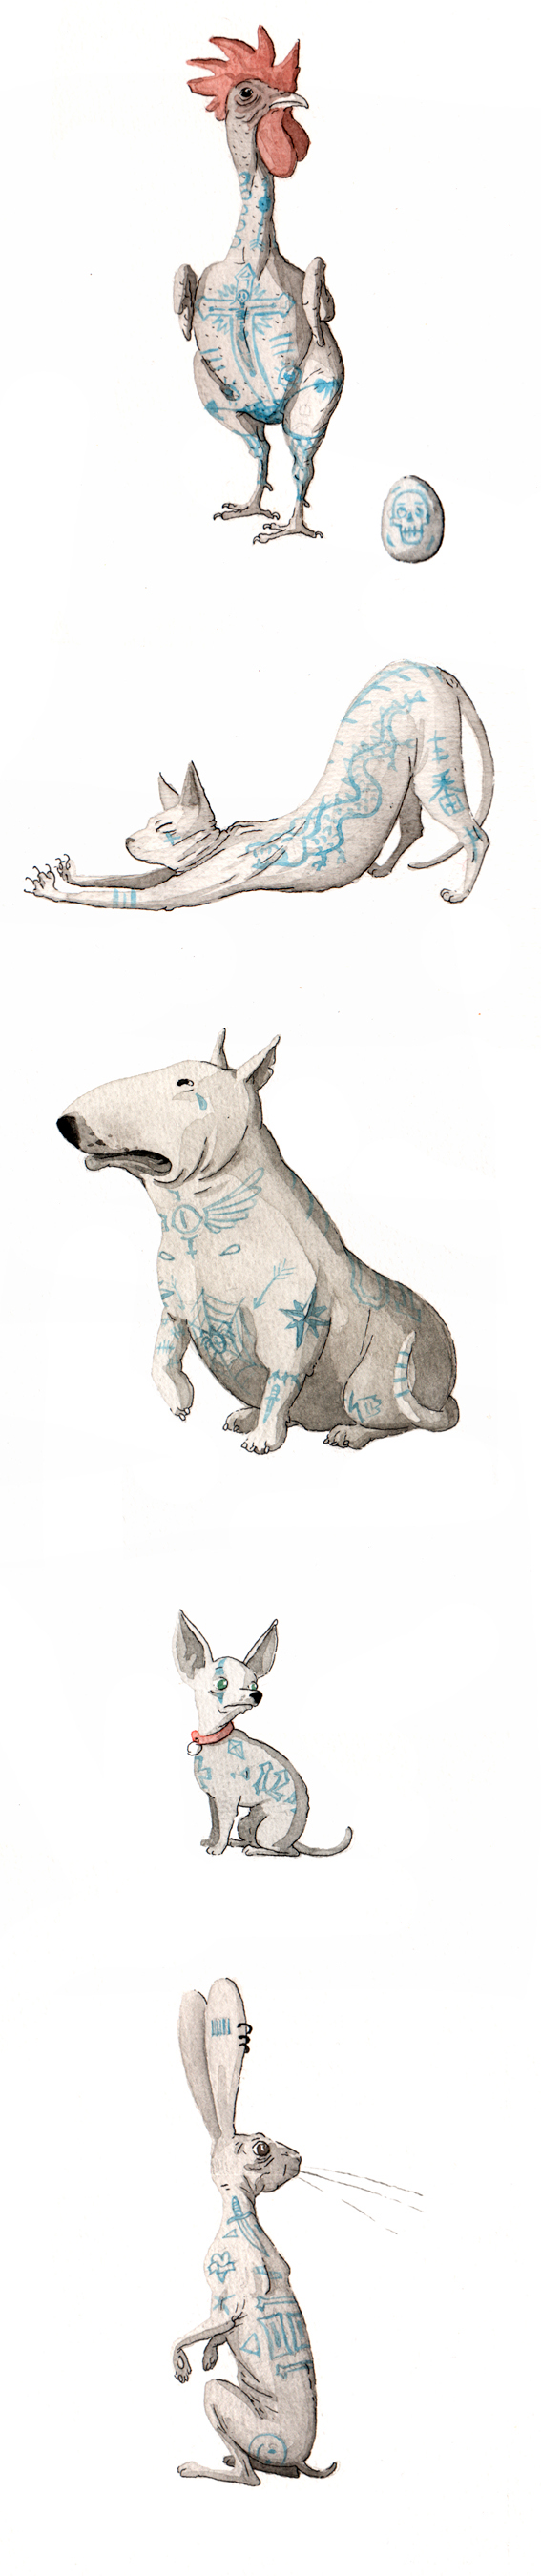 ILLUSTRATION  characterdesign comic watercolor animal Pet Cat dog Chiahuahua tattoo